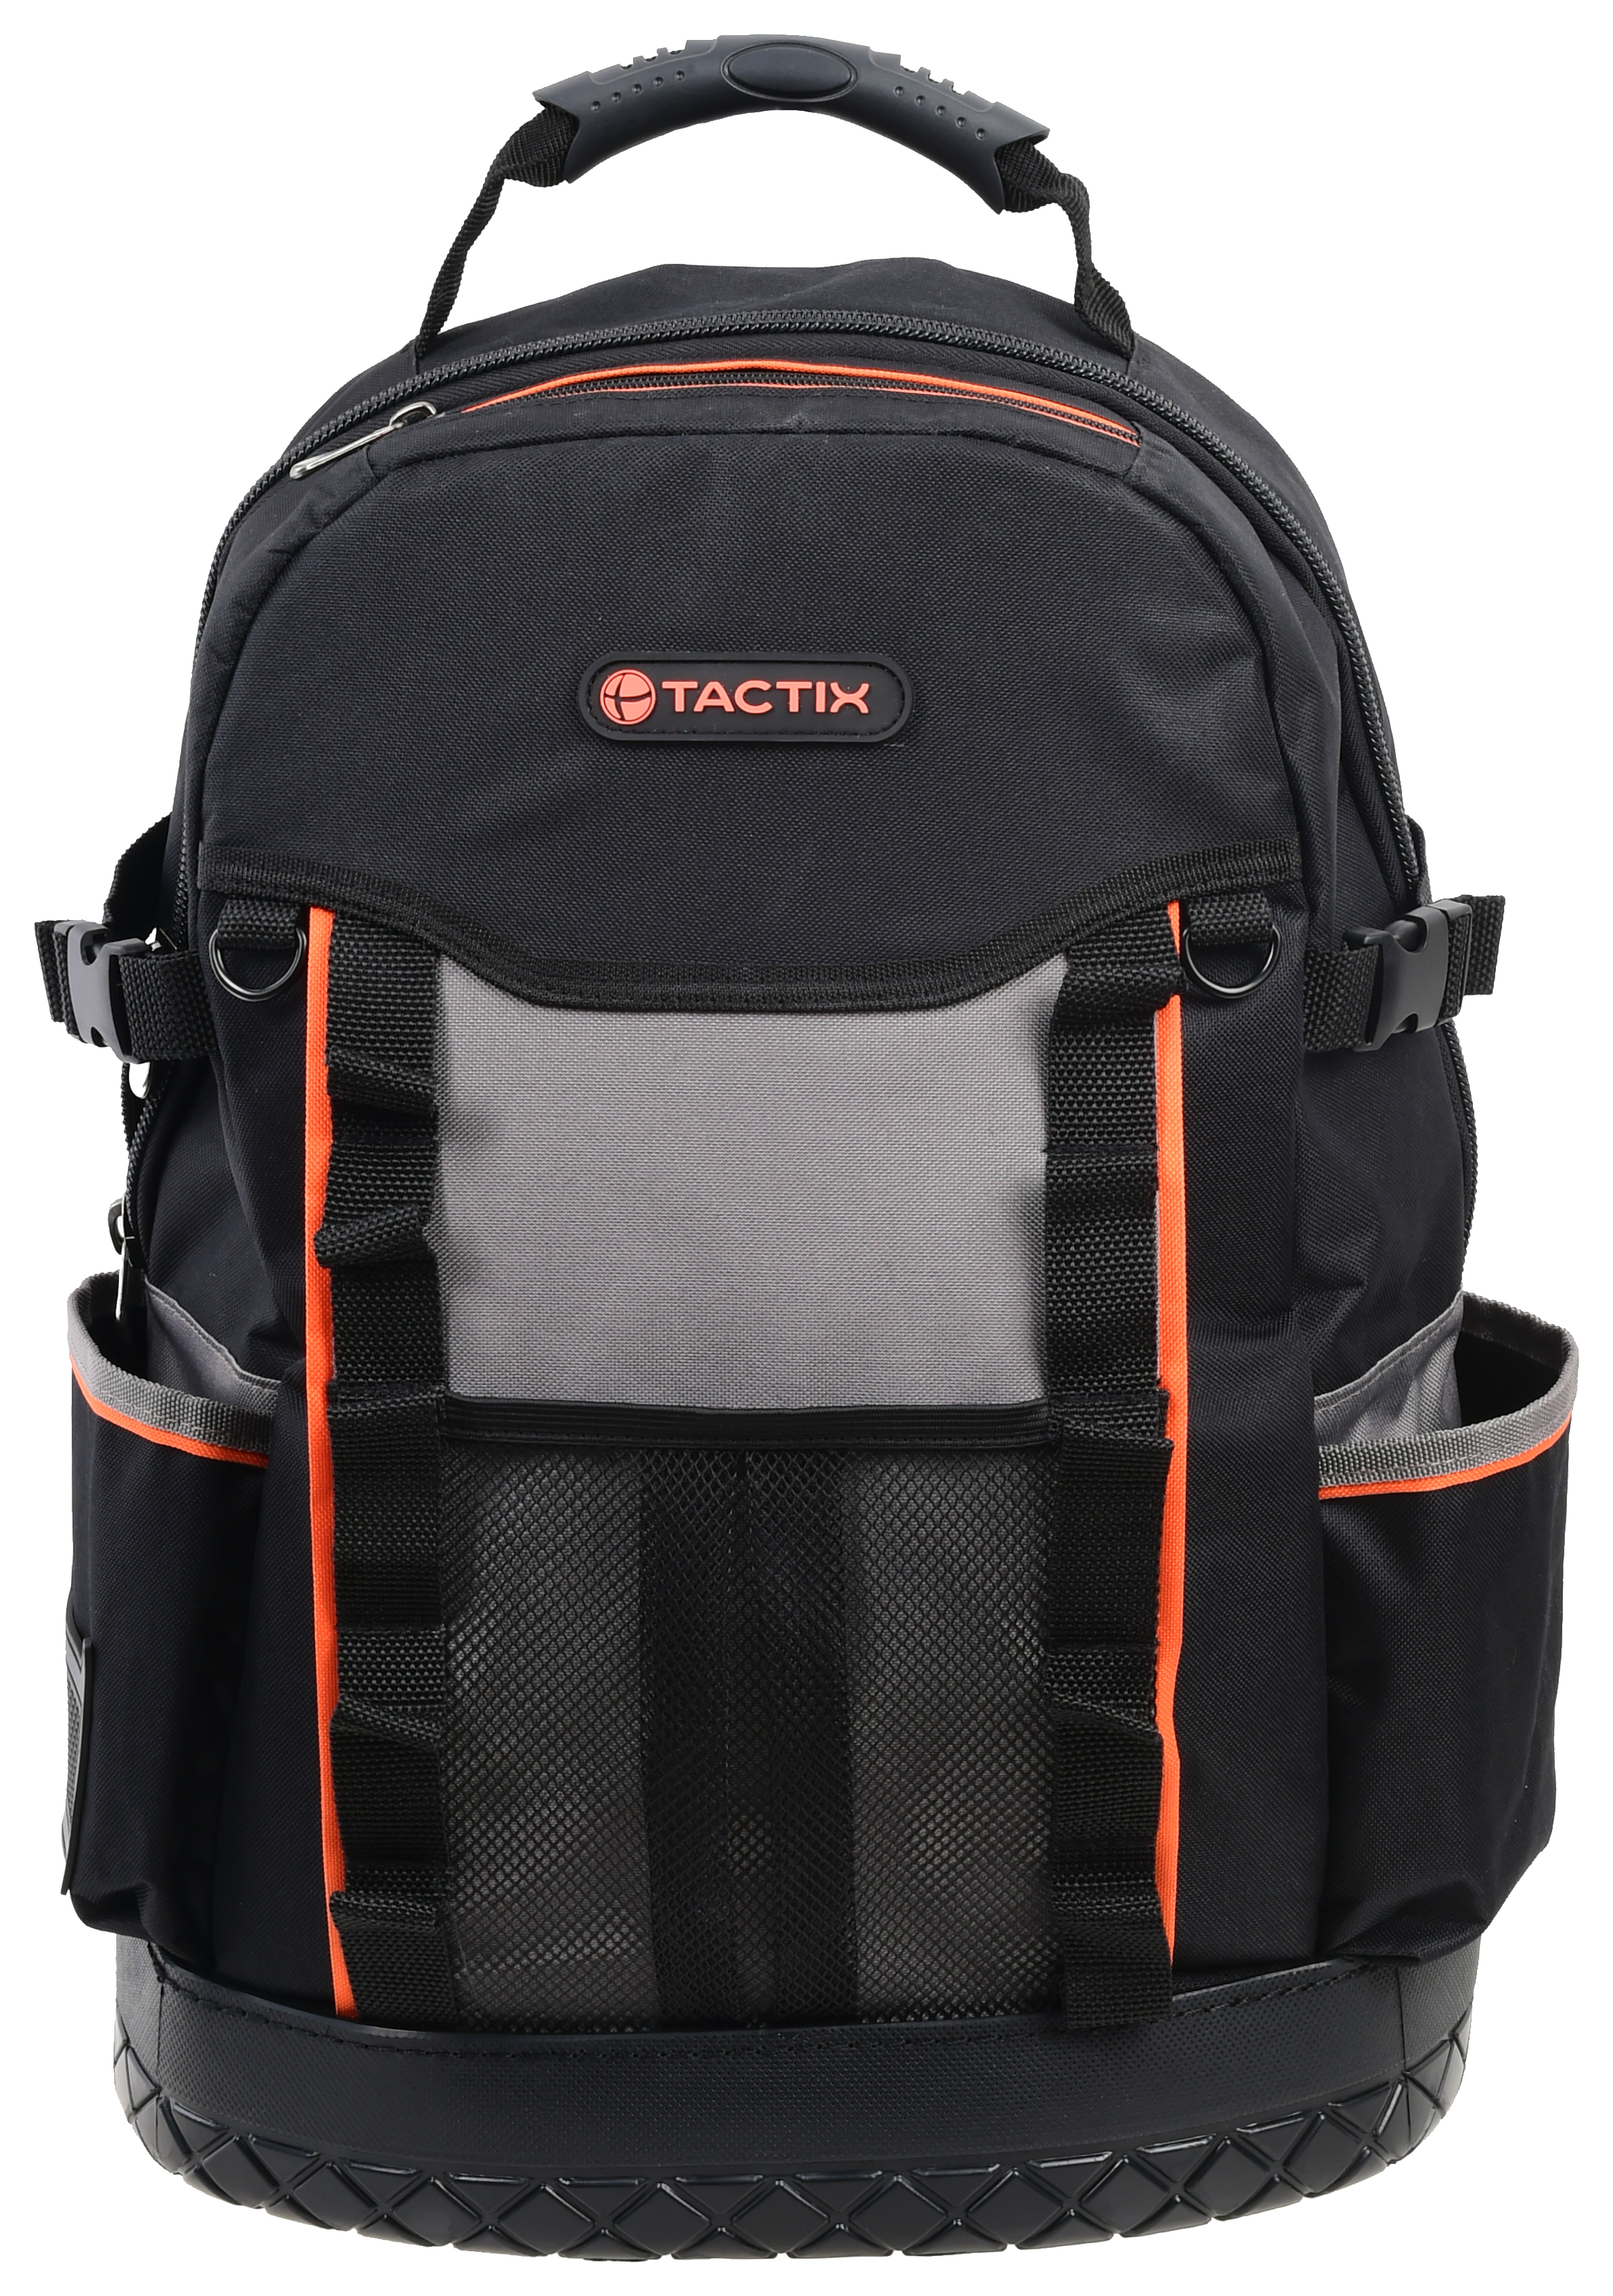 Tactix Rugged Heavy Duty Tools Backpack